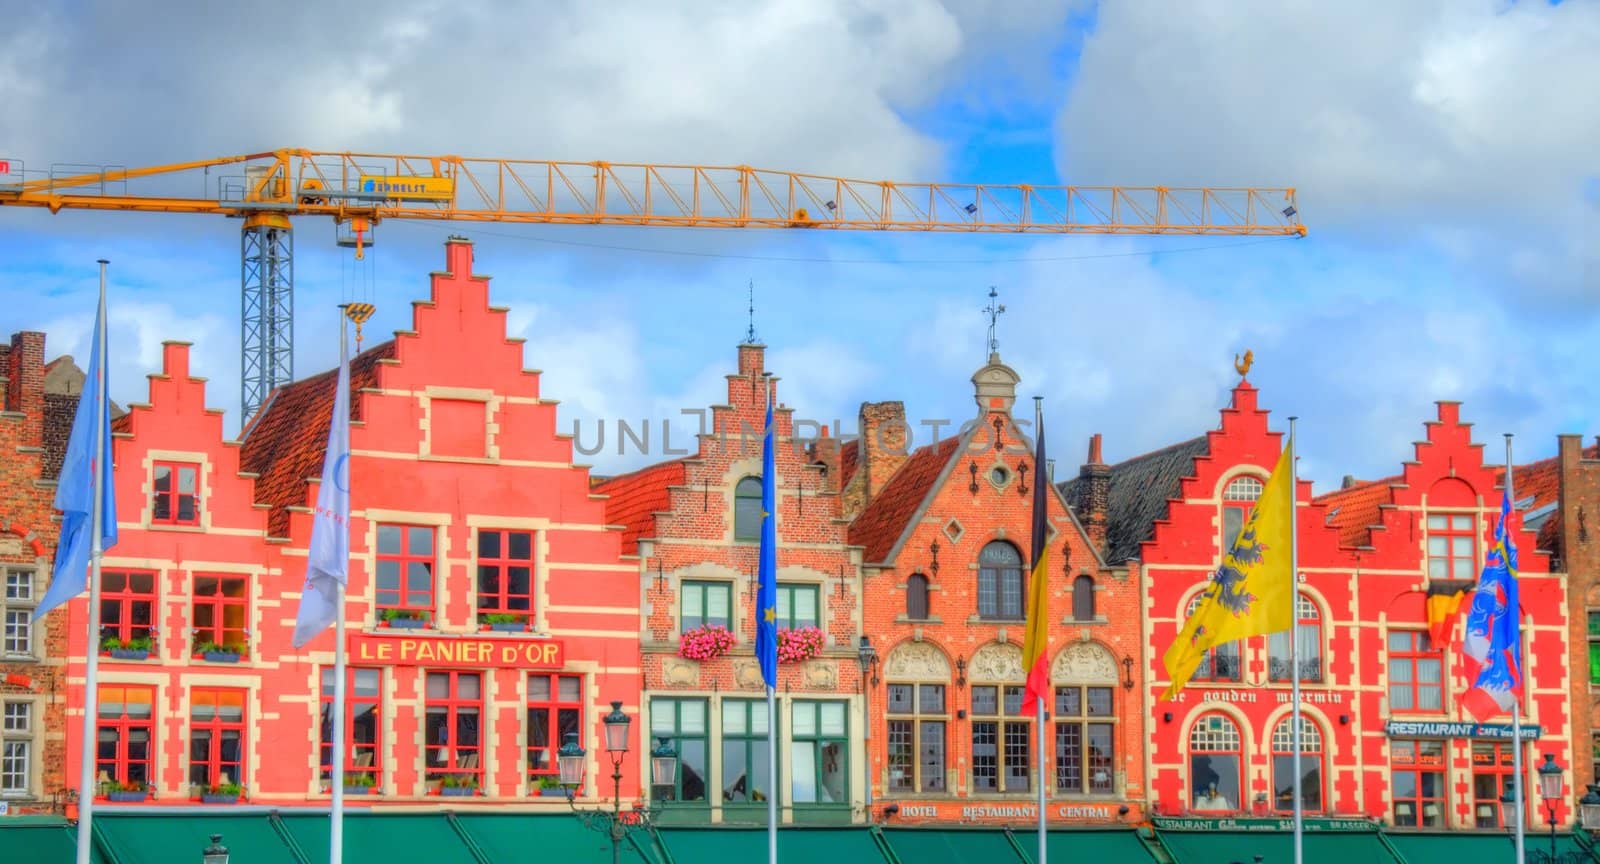 historical buildings in bruges, belgium by arnelsr